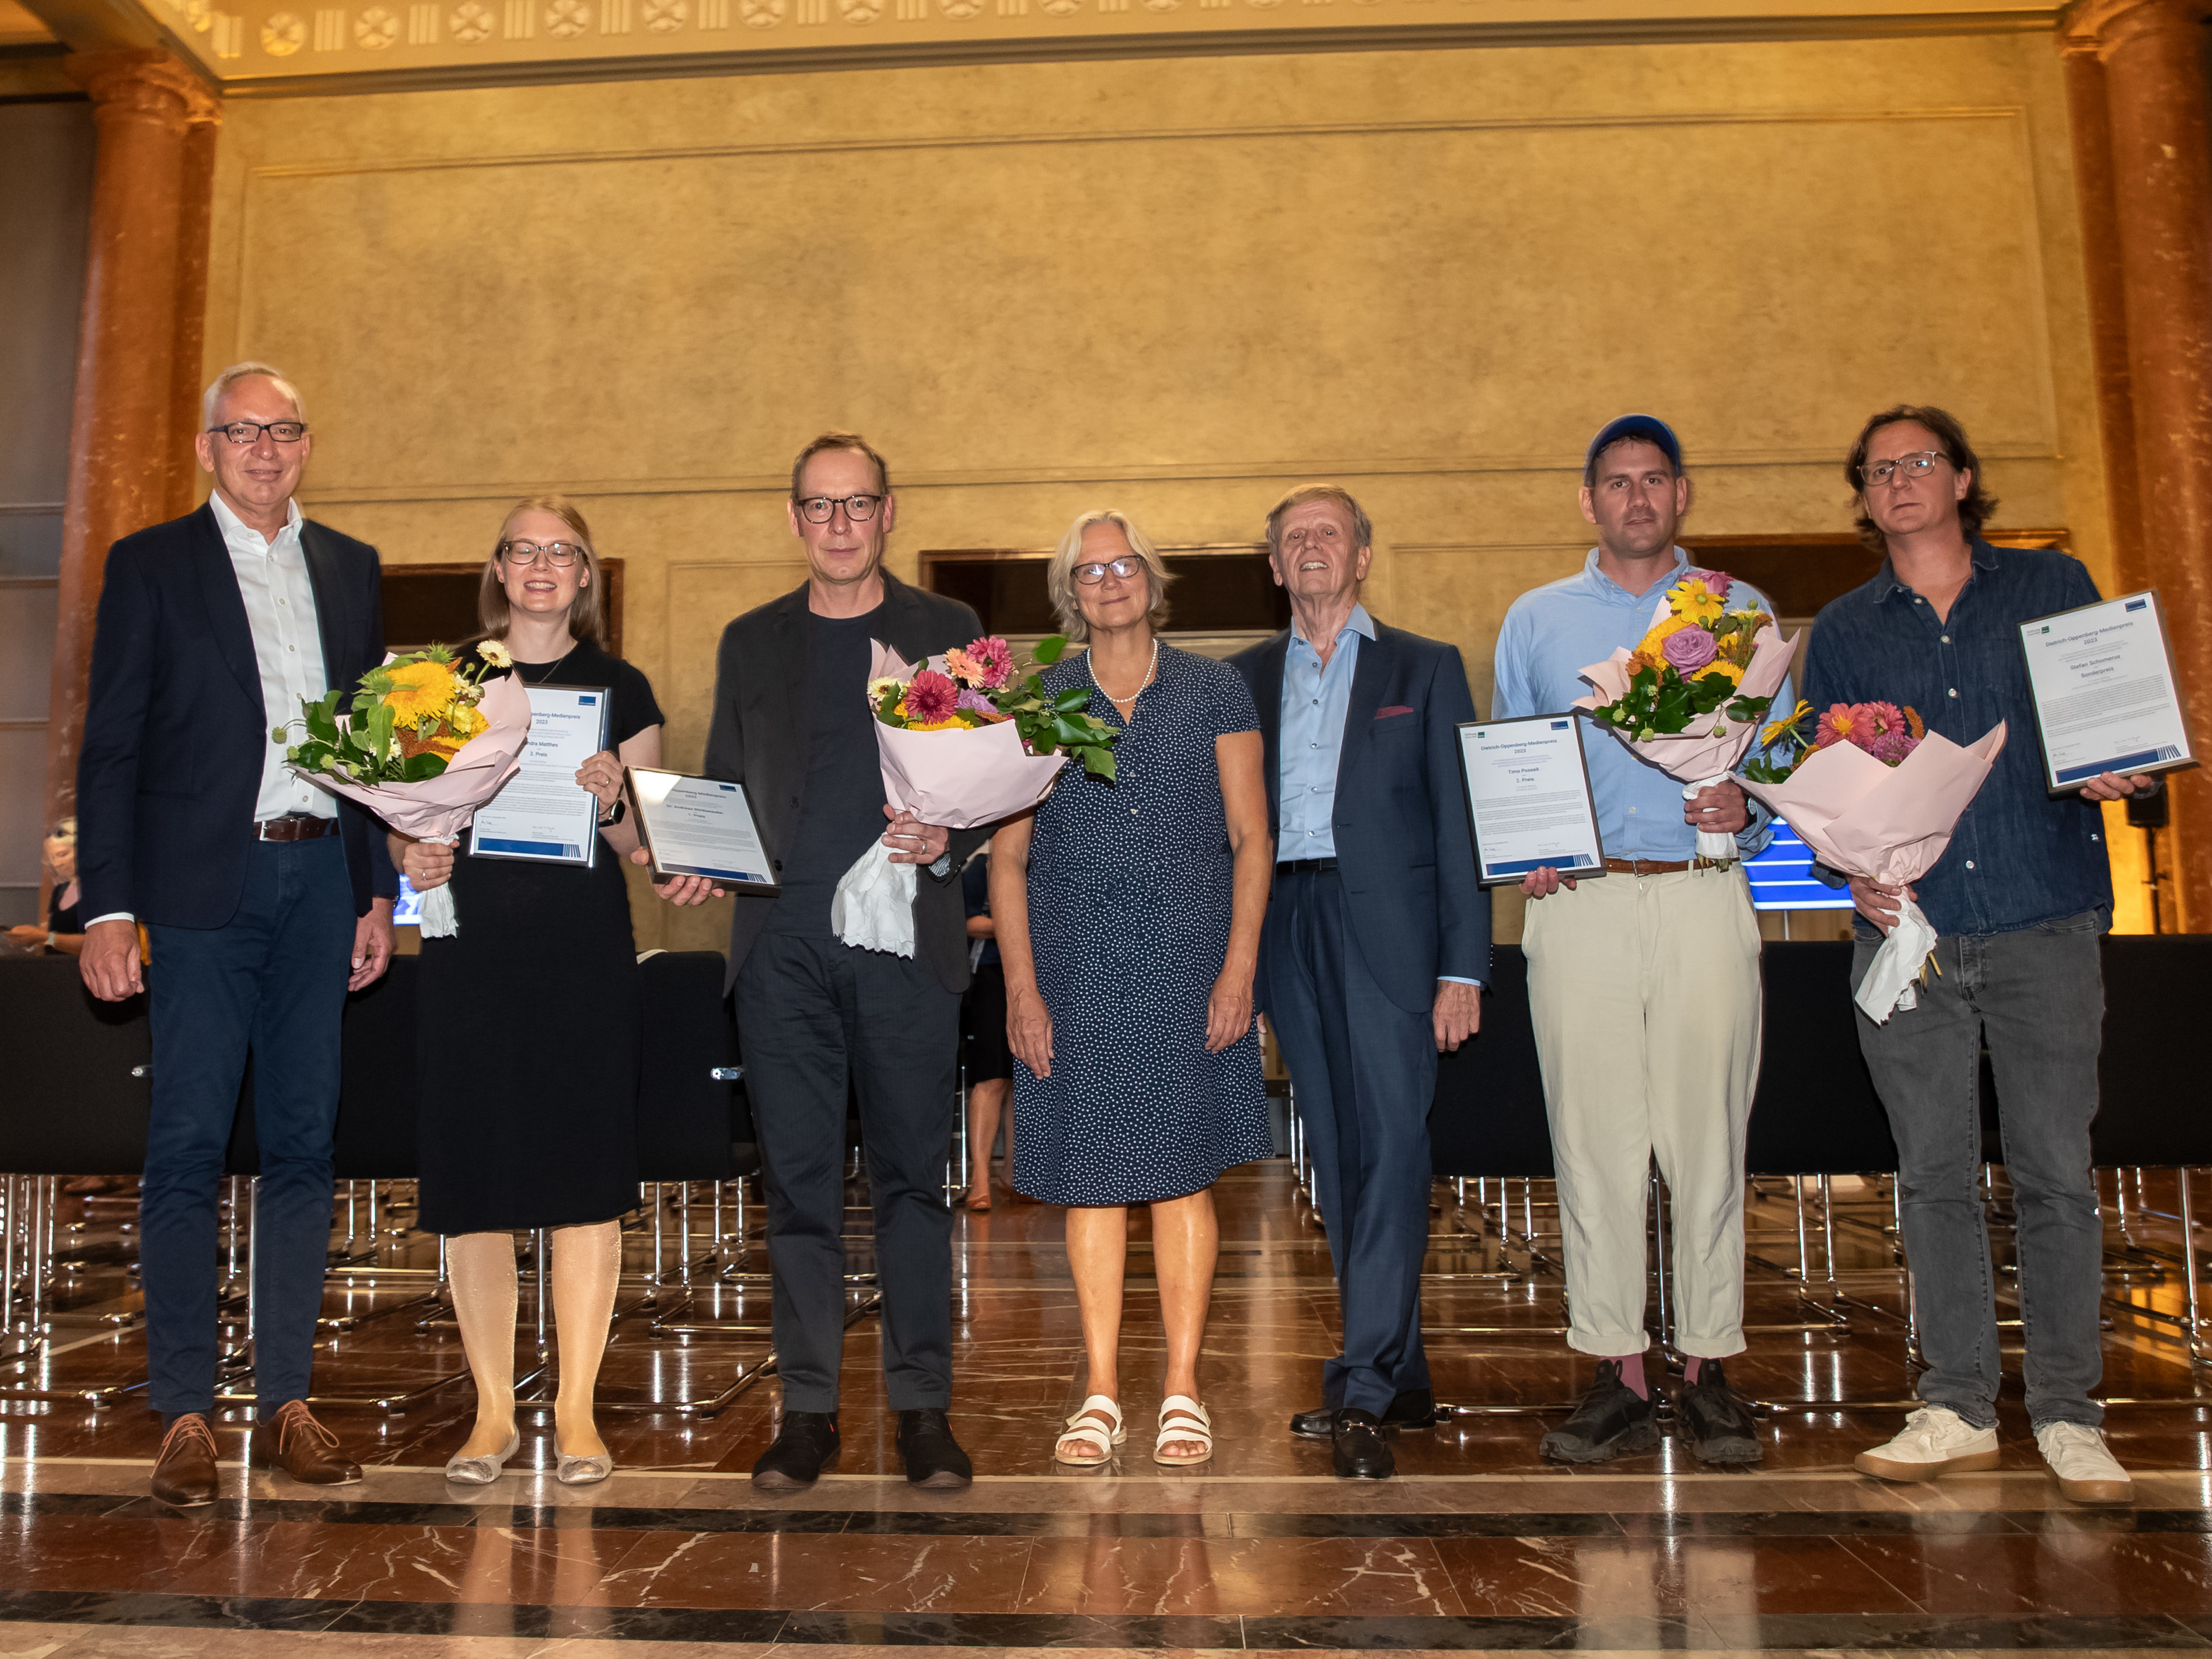 Preisträger des Dietrich-Oppenberg-Medienpreises 2023: Dr. Andreas Wirthensohn, Timo Posselt, Sandra Matthes, Stefan Schomerus